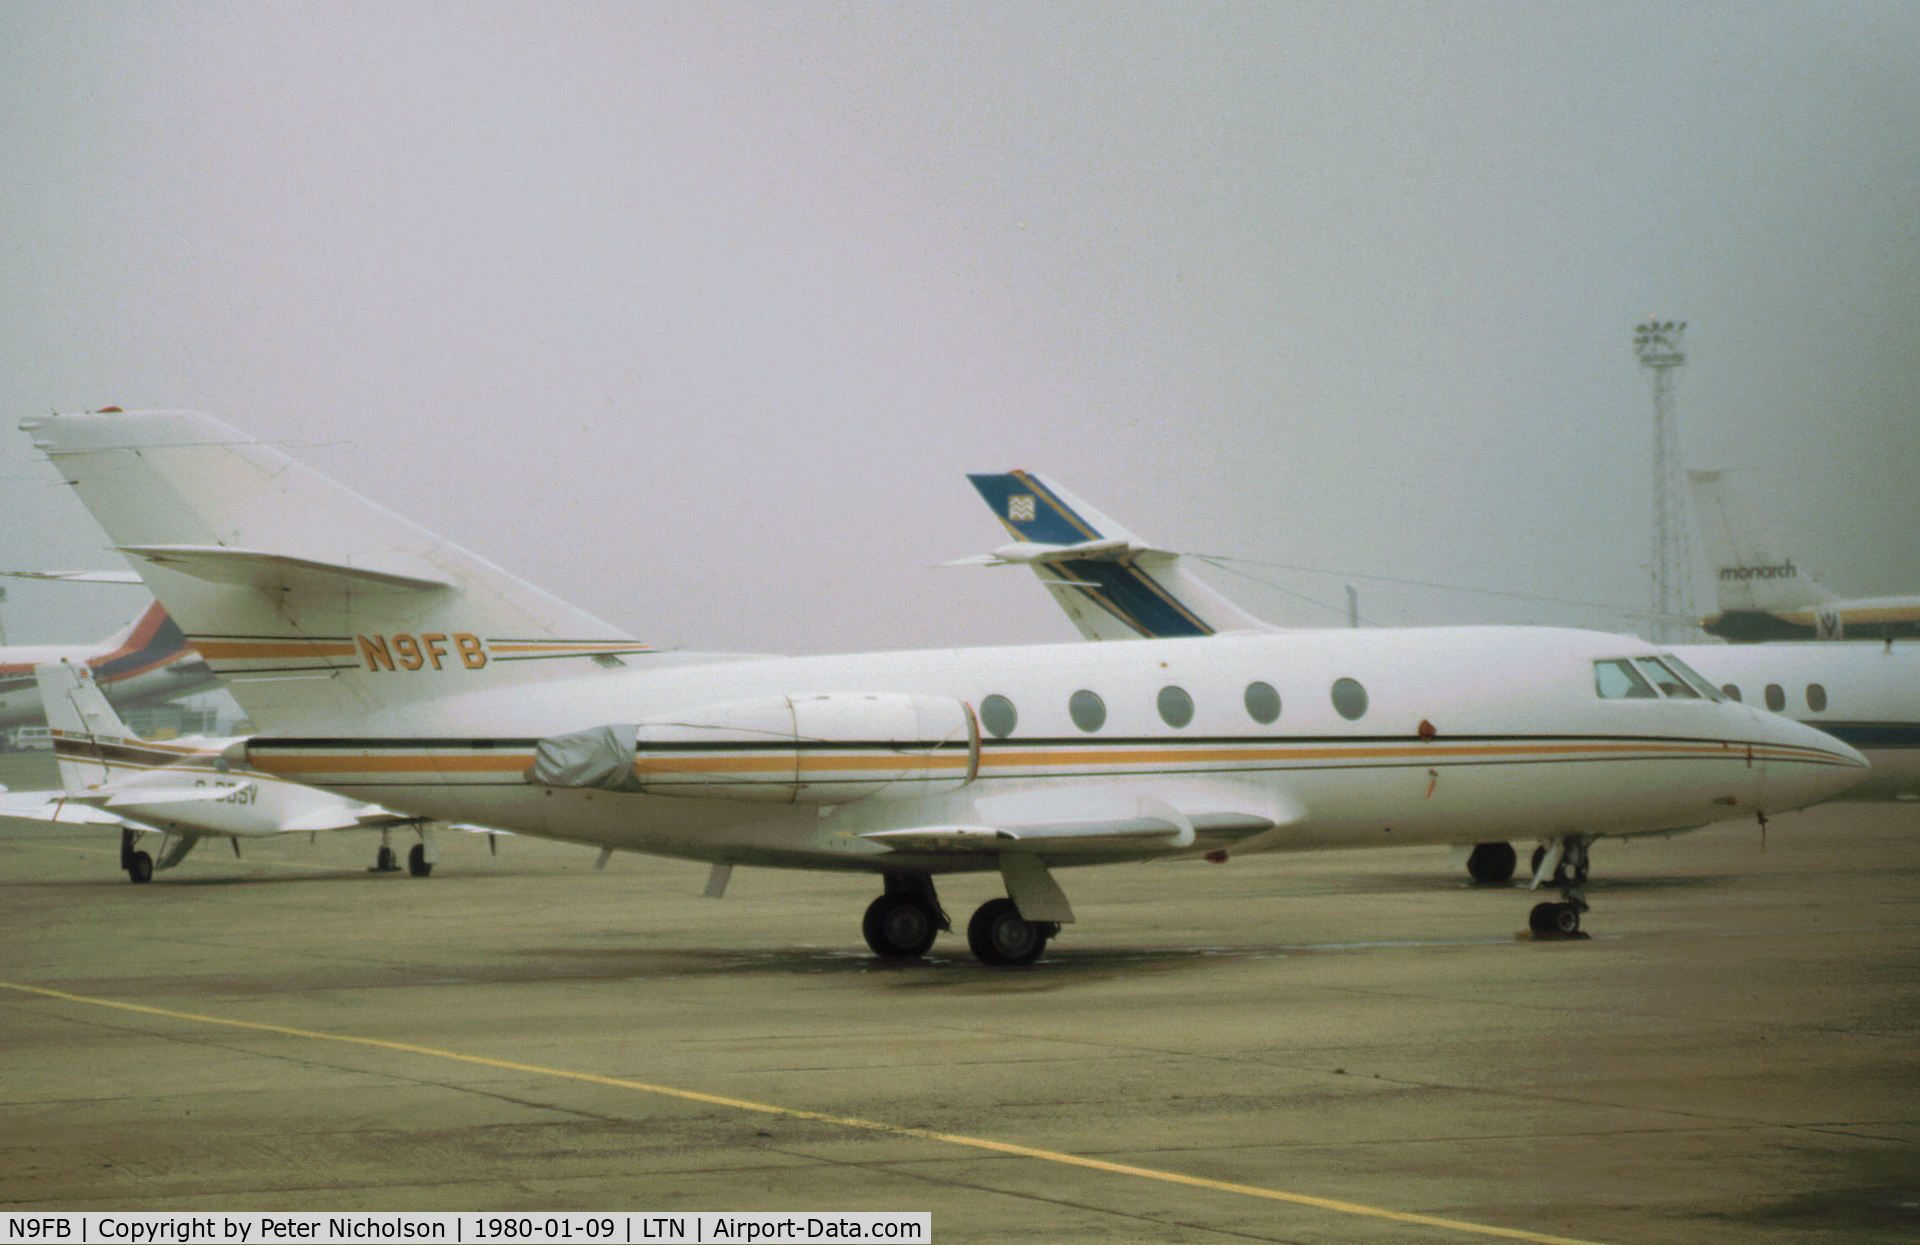 N9FB, 1972 Dassault Falcon (Mystere) 20E C/N 275, Falcon 20E as seen at Luton in January 1980.